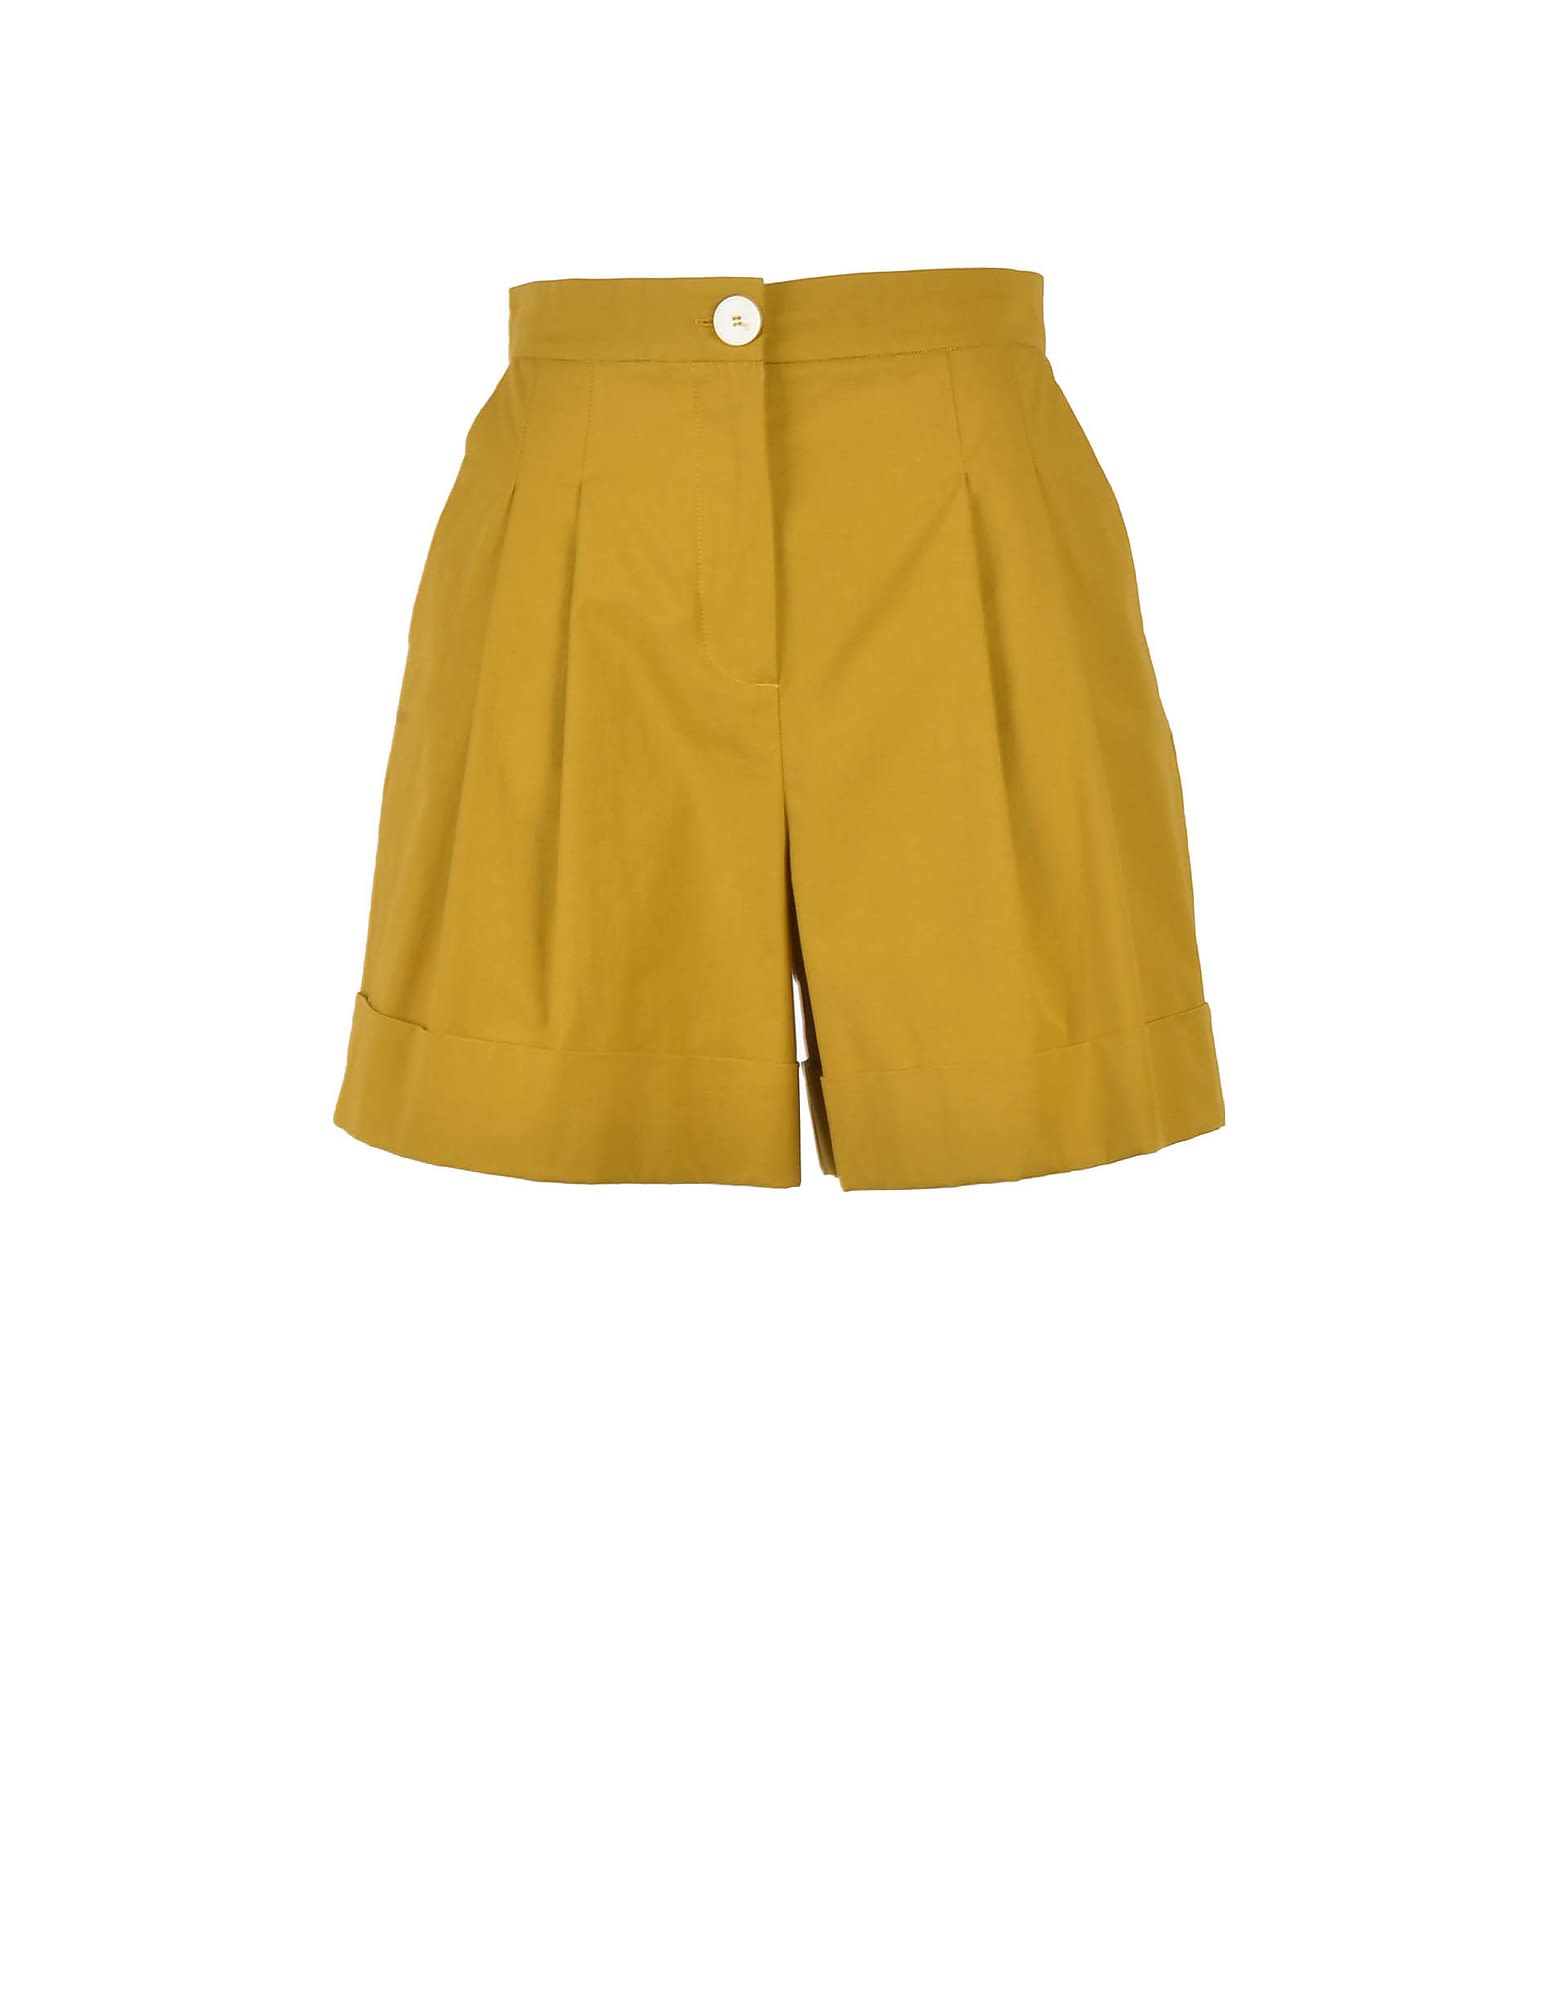 Alysi Womens Mustard Shorts